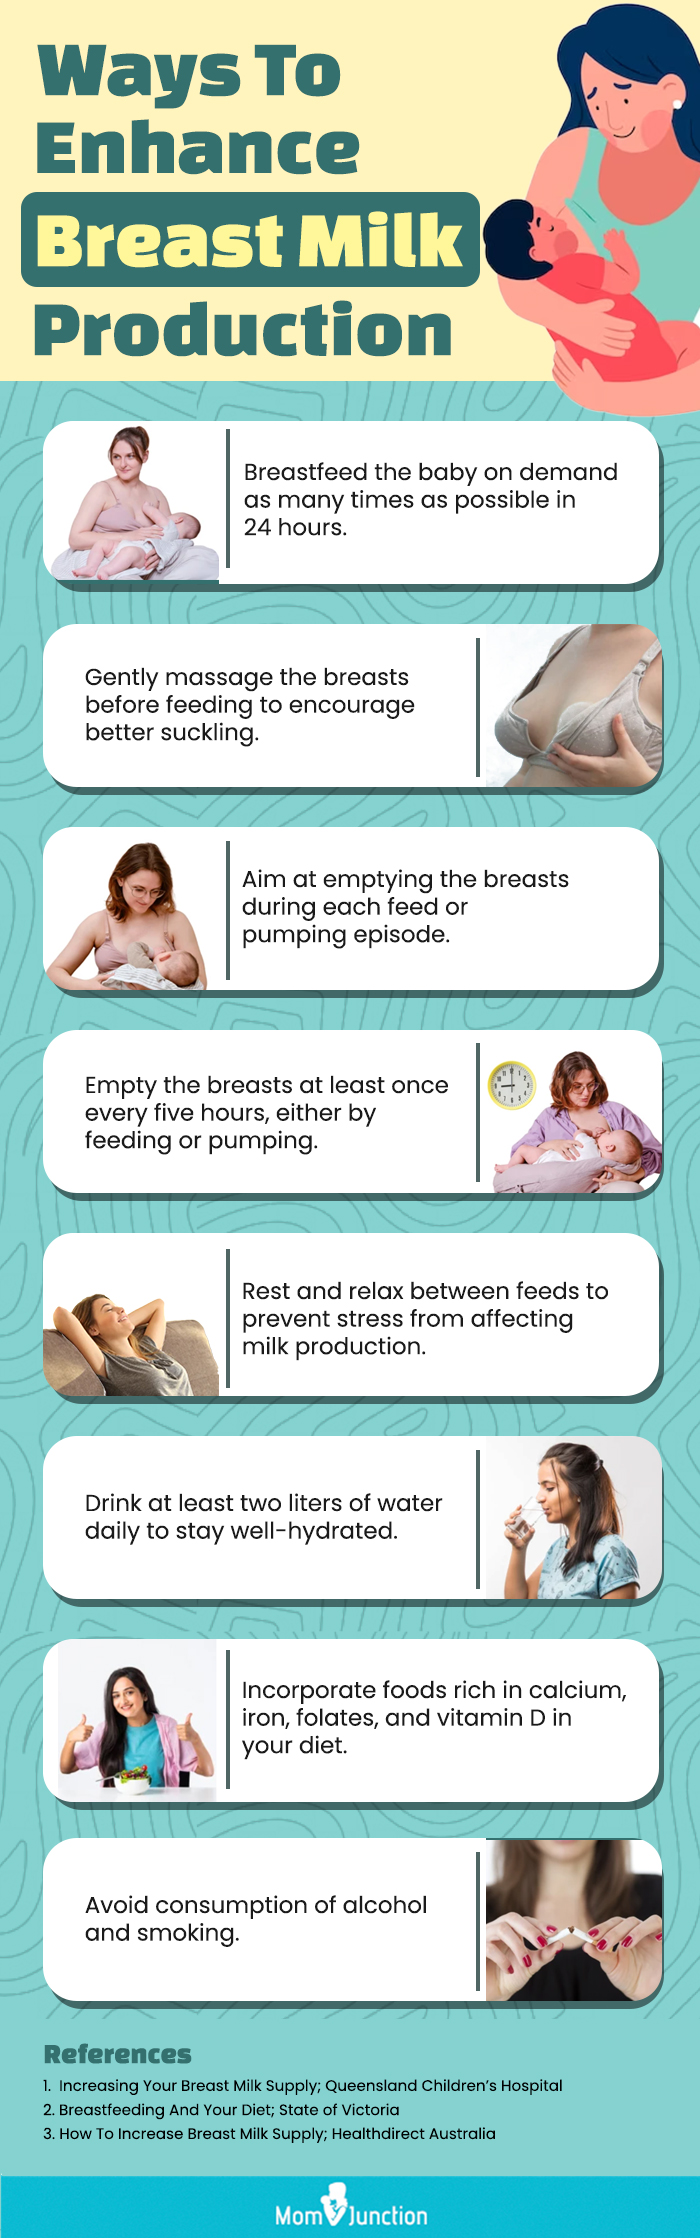 Ways To Enhance Breast Milk Production.jpg (infographic)